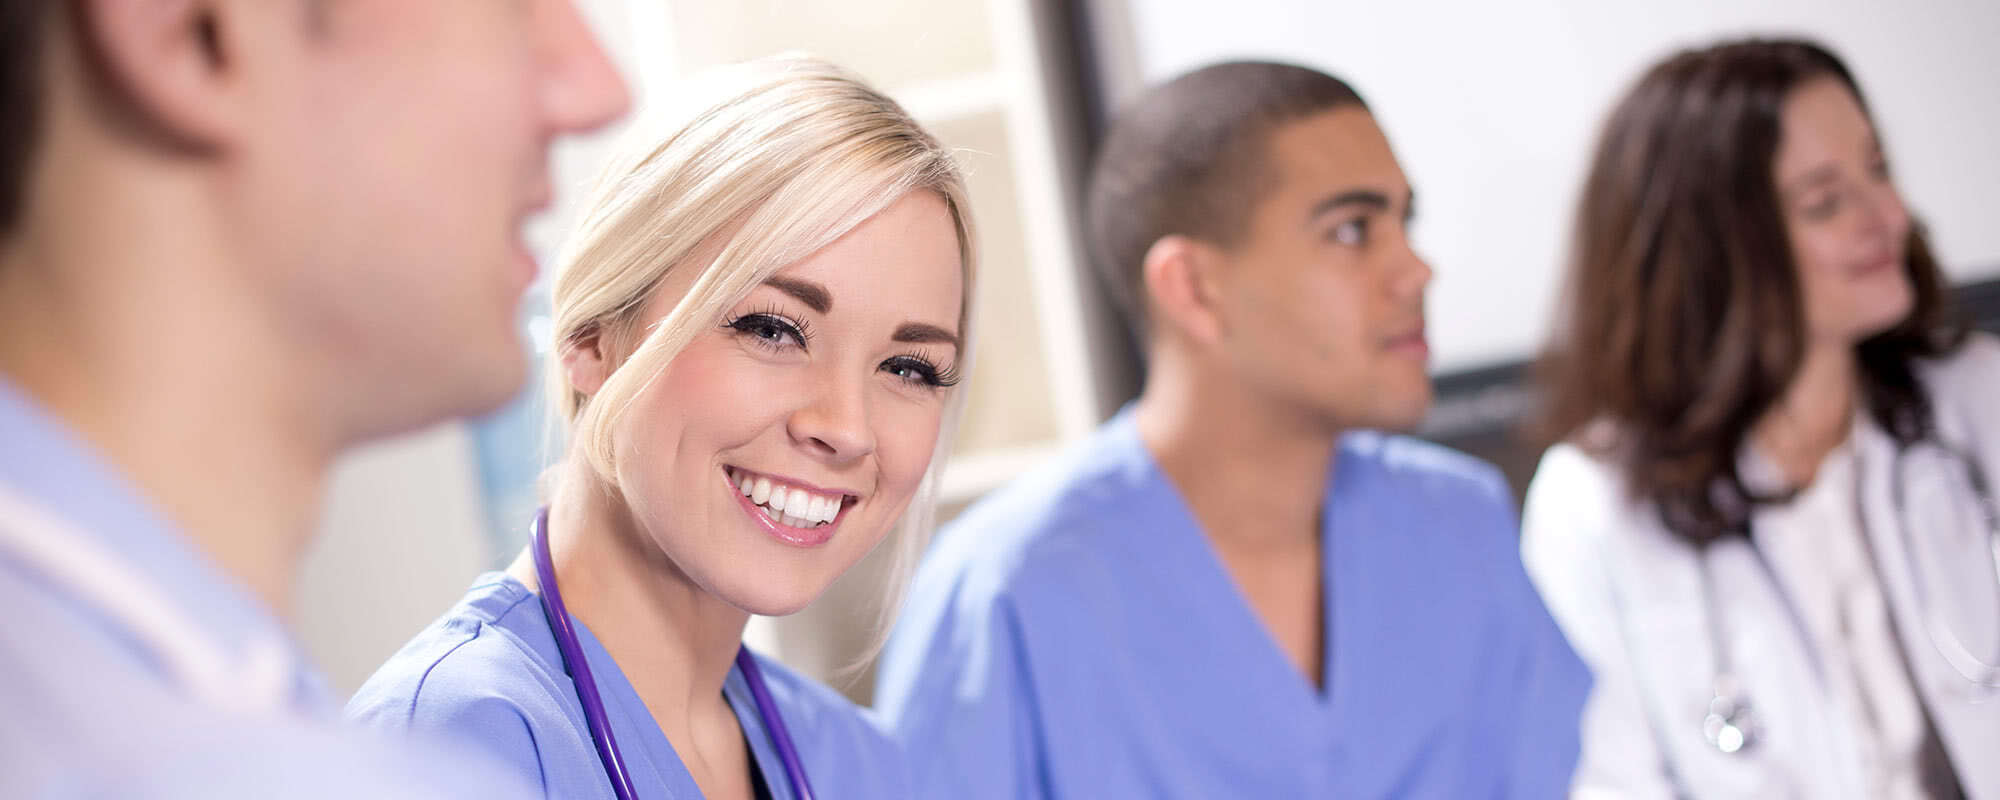 careers at steward health care